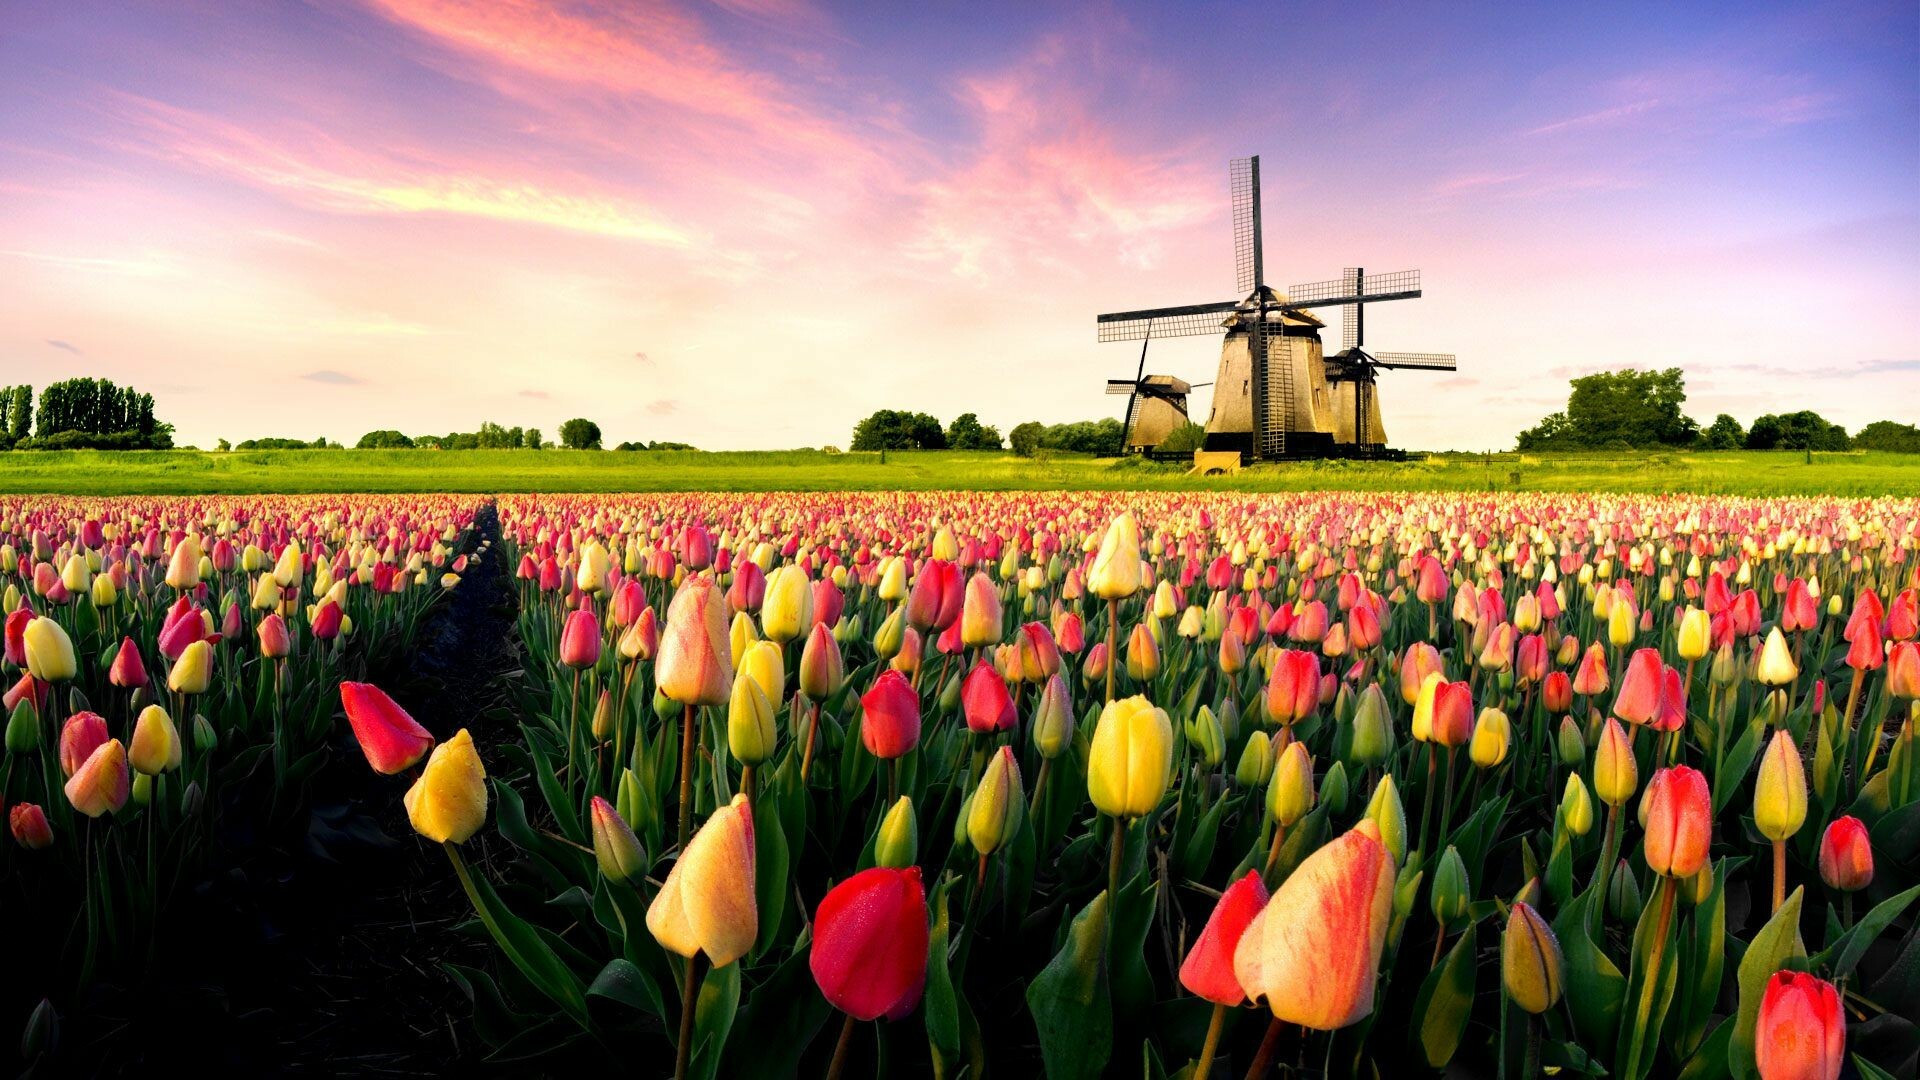 Netherlands: Dutch landmark, Tulip fields, Located in the Noordoostpolder in the province of Flevoland. 1920x1080 Full HD Background.